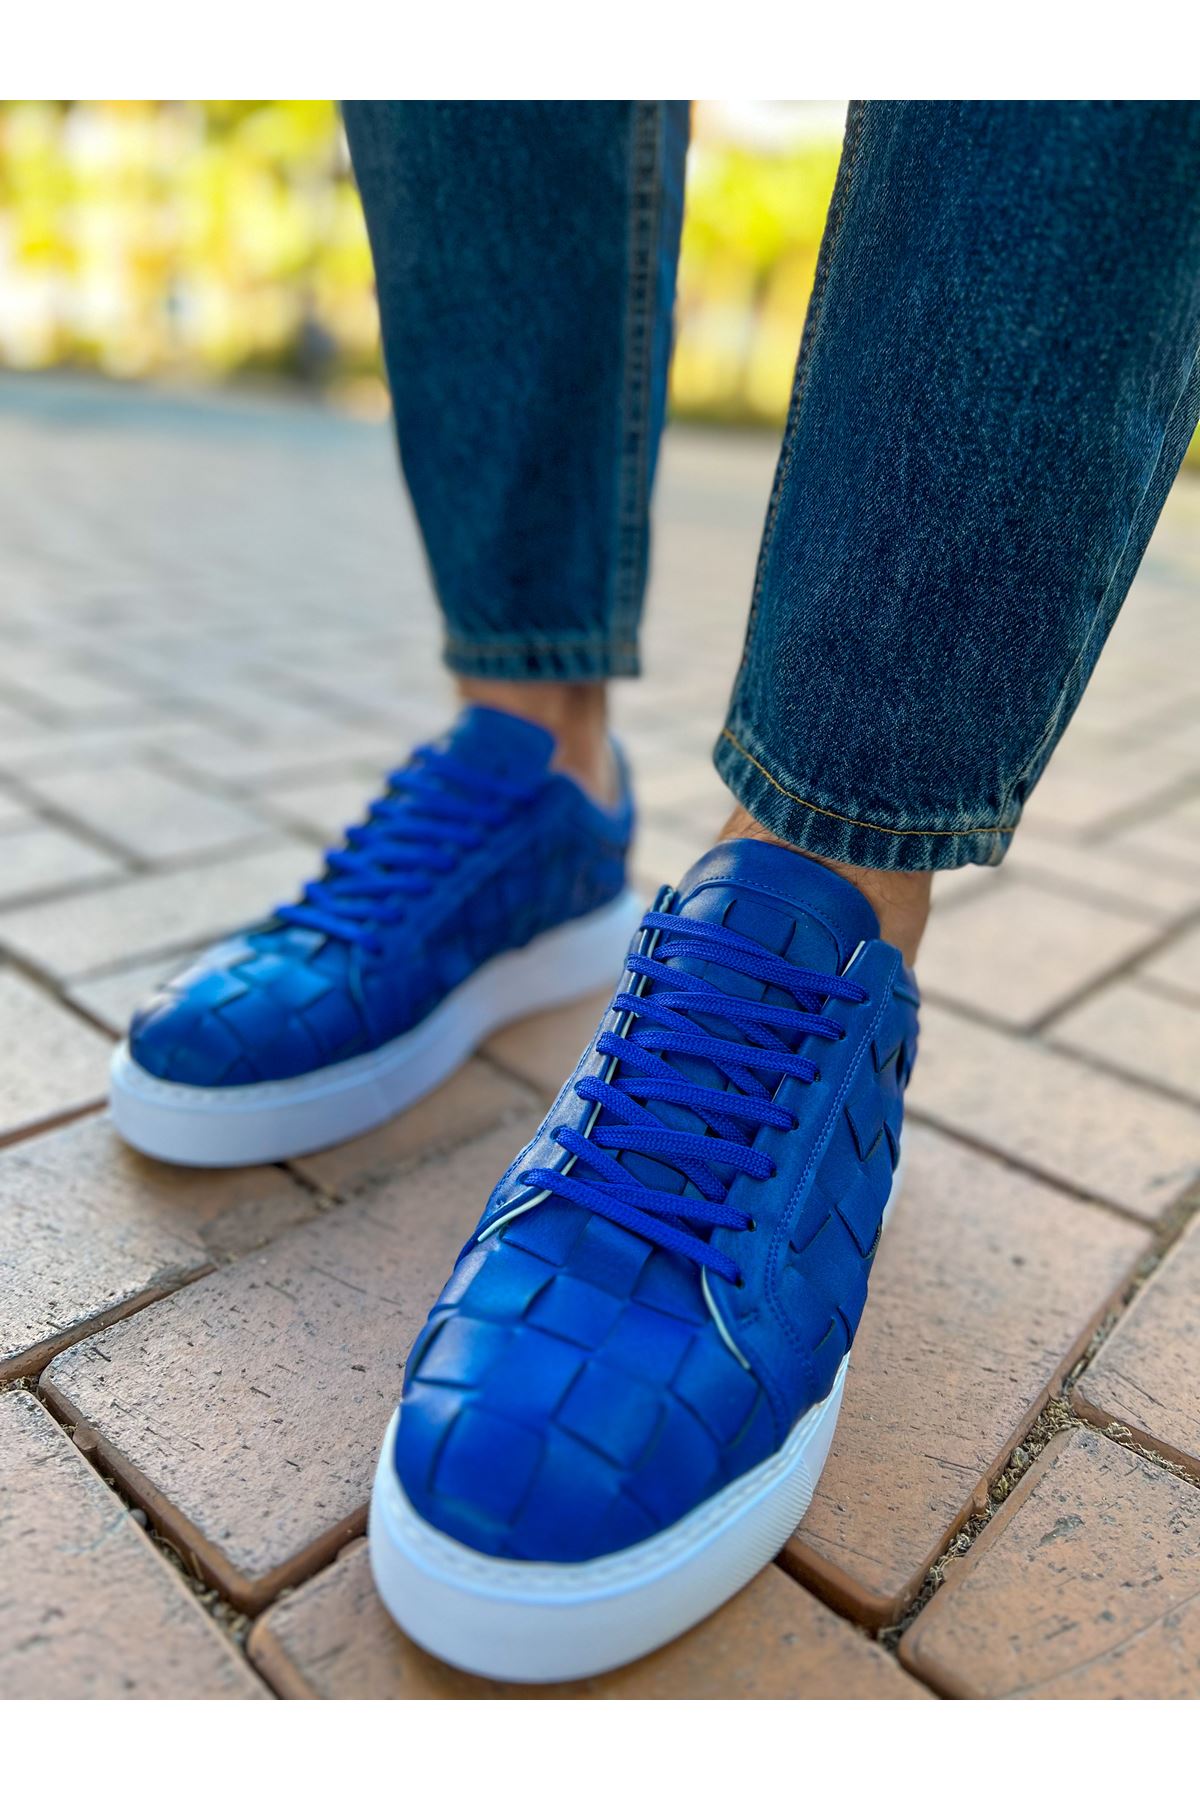 CH209 OBT Vimini Men's Shoes sneakers BLUE - STREETMODE™